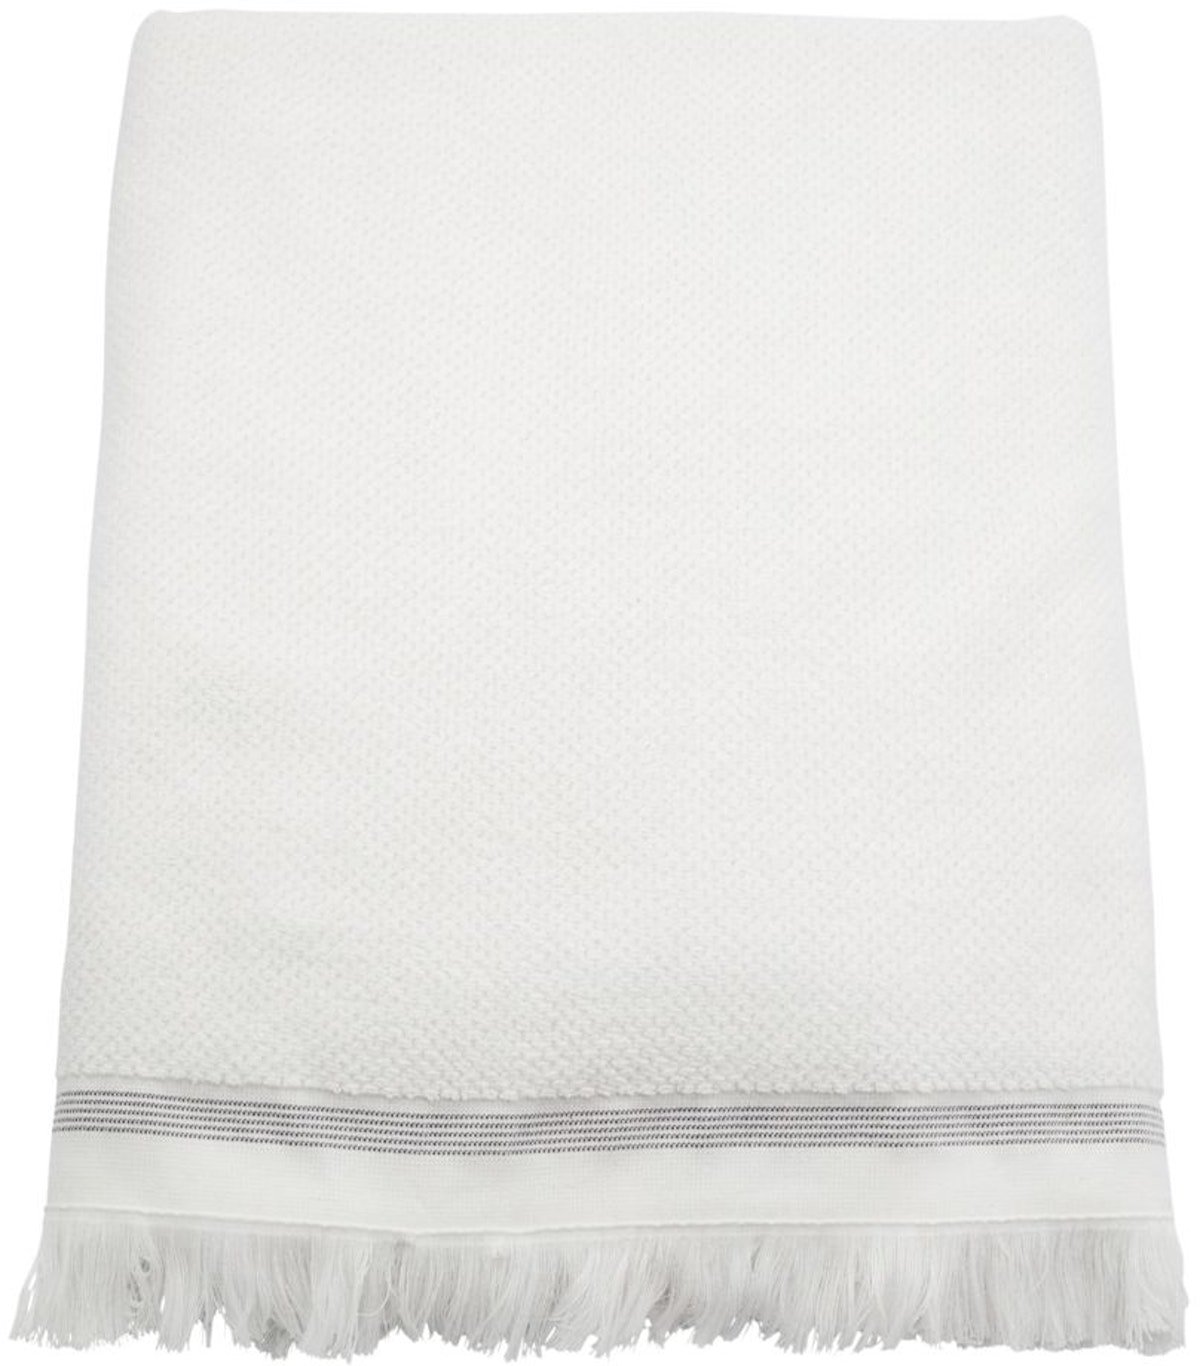 Håndklæde, Økologisk bomuld by Meraki (B: 180 cm. x L: 100 cm., Hvid med grå striber)